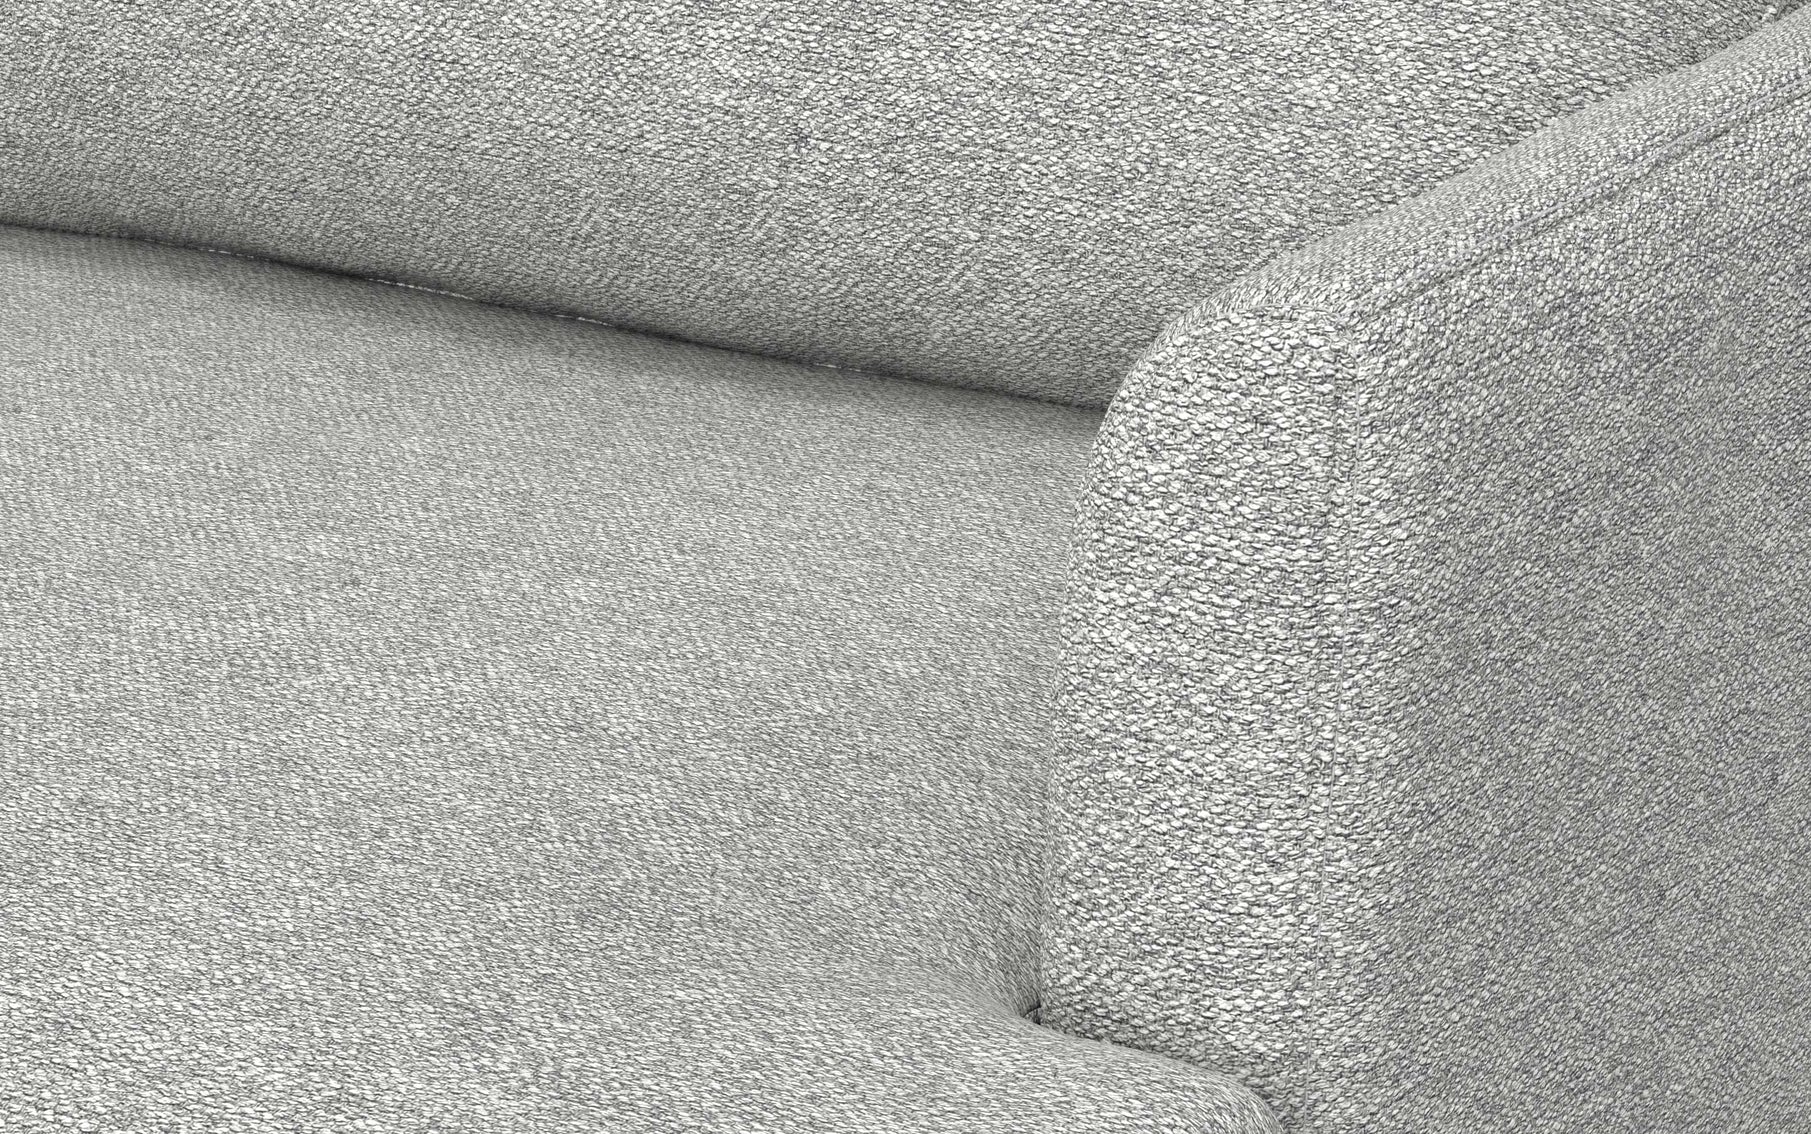 Mist Grey Woven-Blend Fabric | Livingston 90 inch Mid Century Sofa